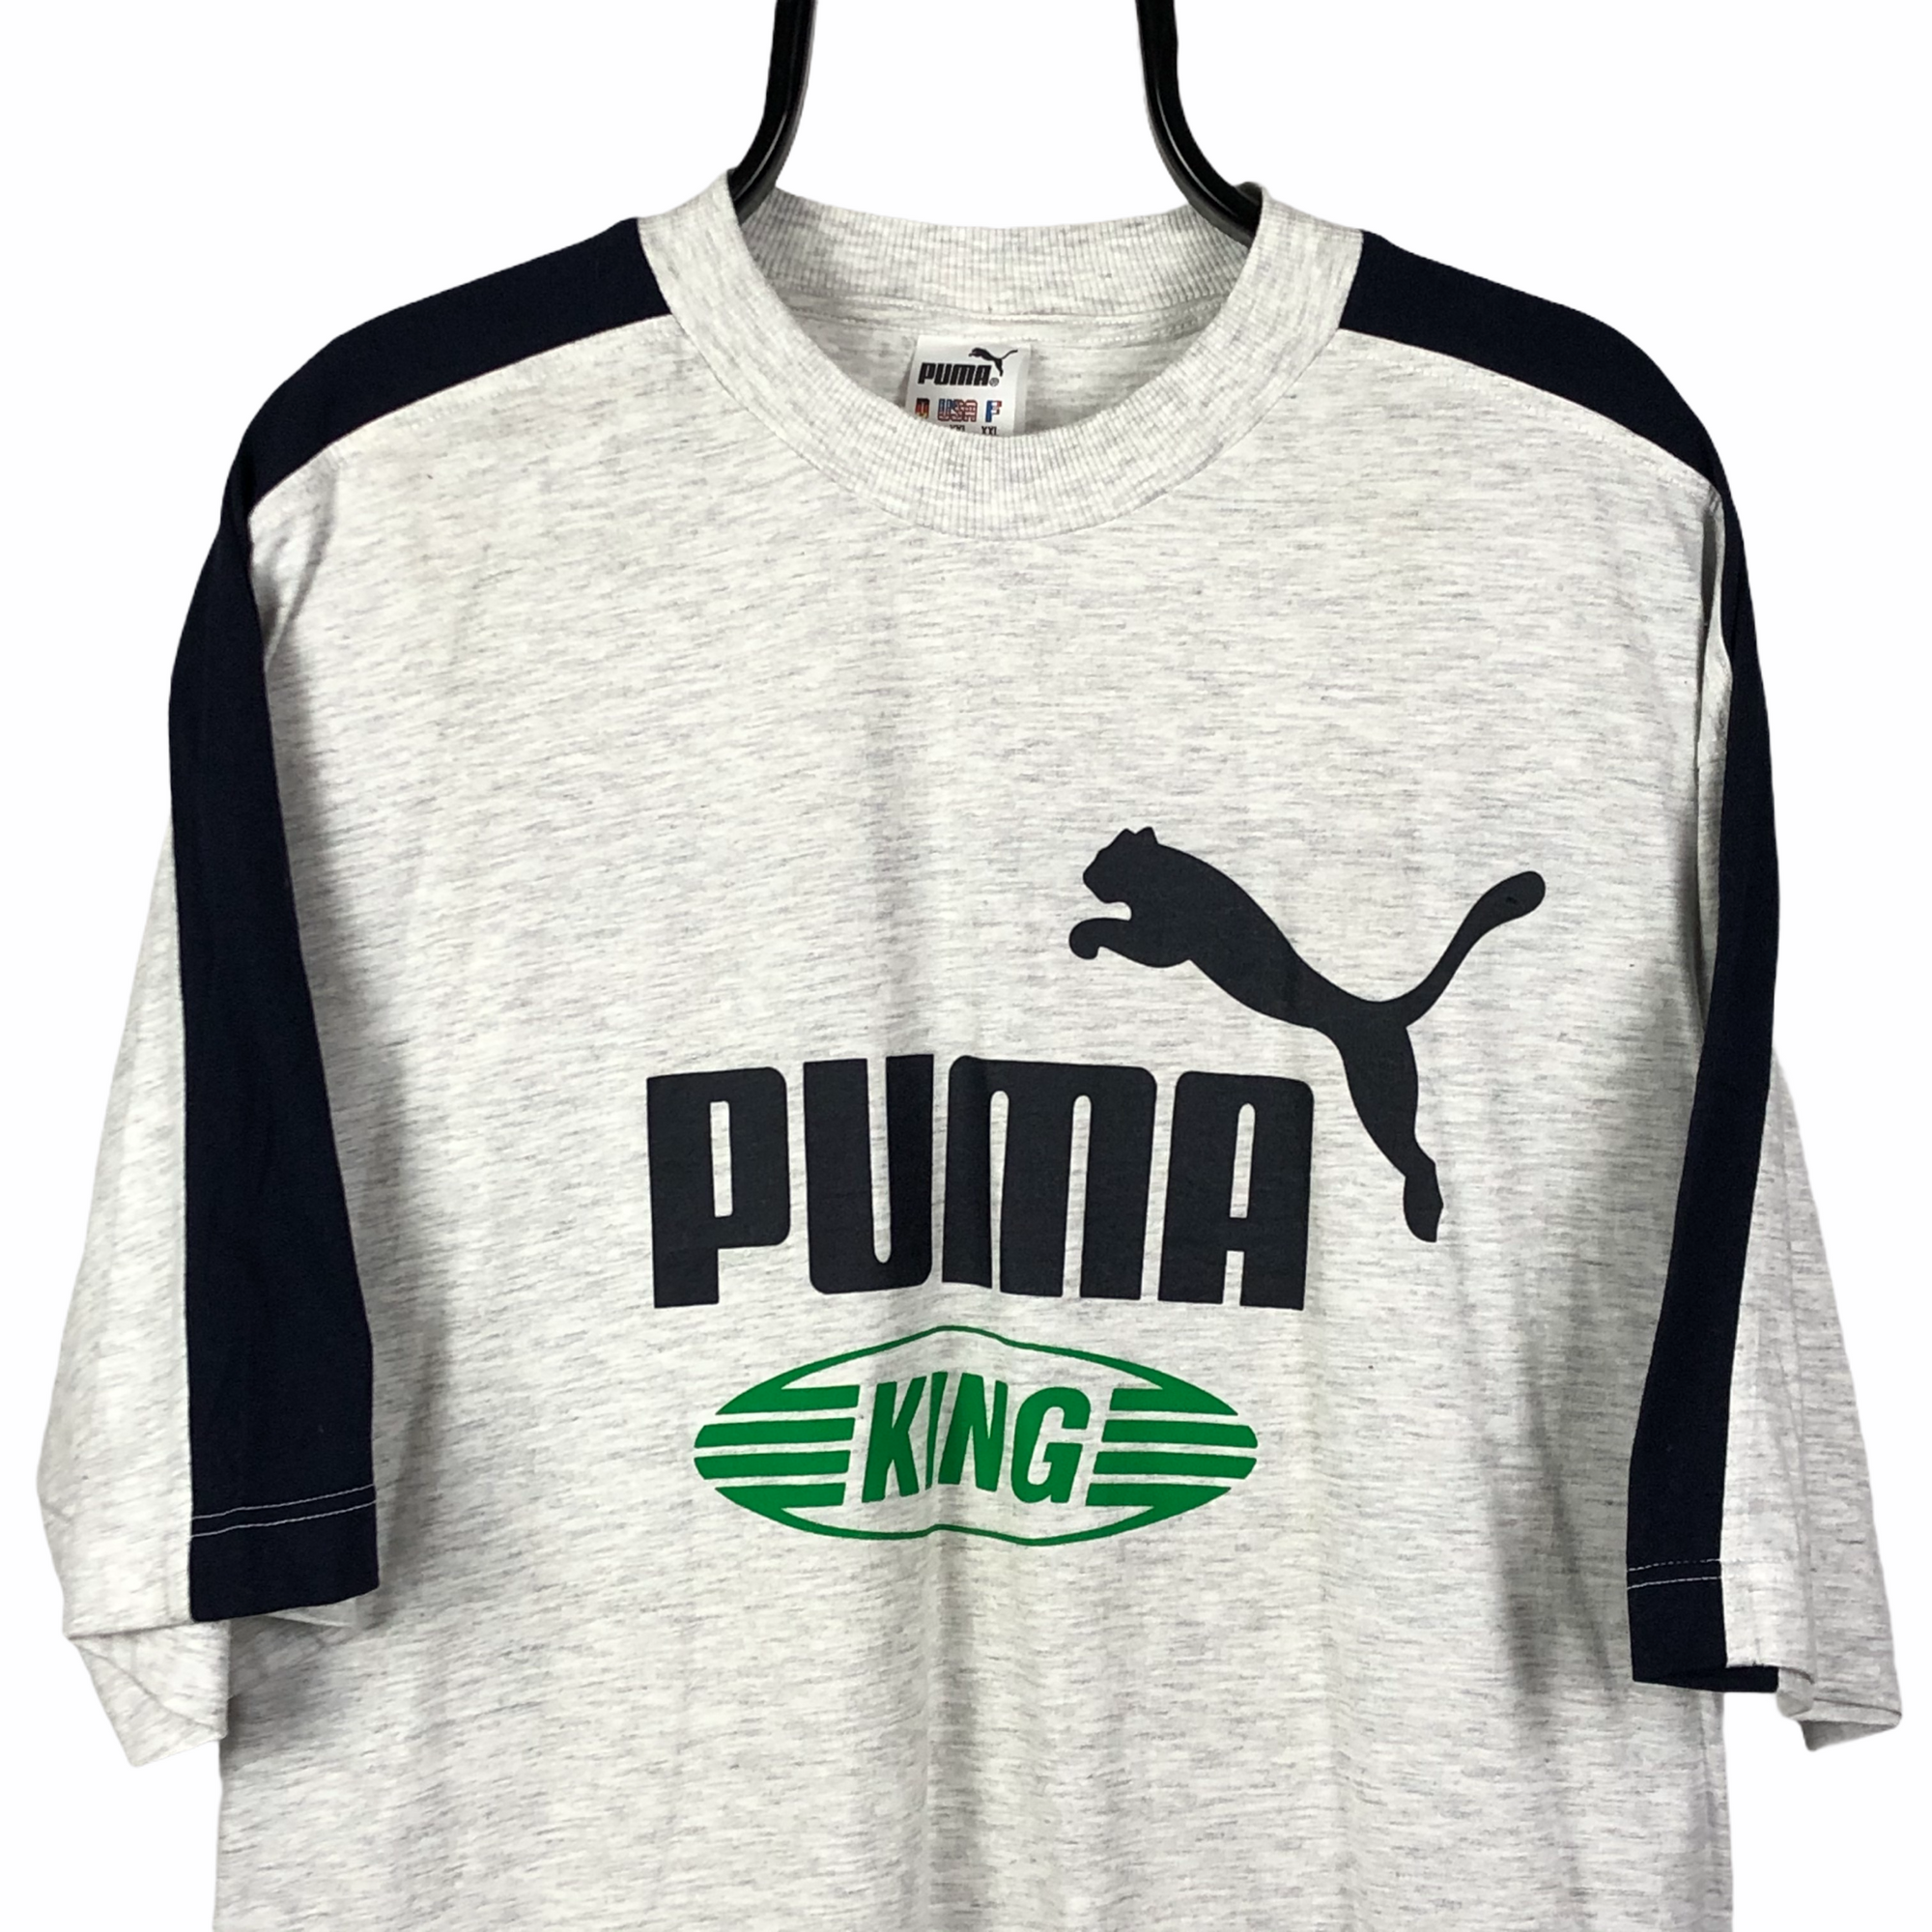 Vintage Puma King Tee - Men's XXL/Women's XXL+